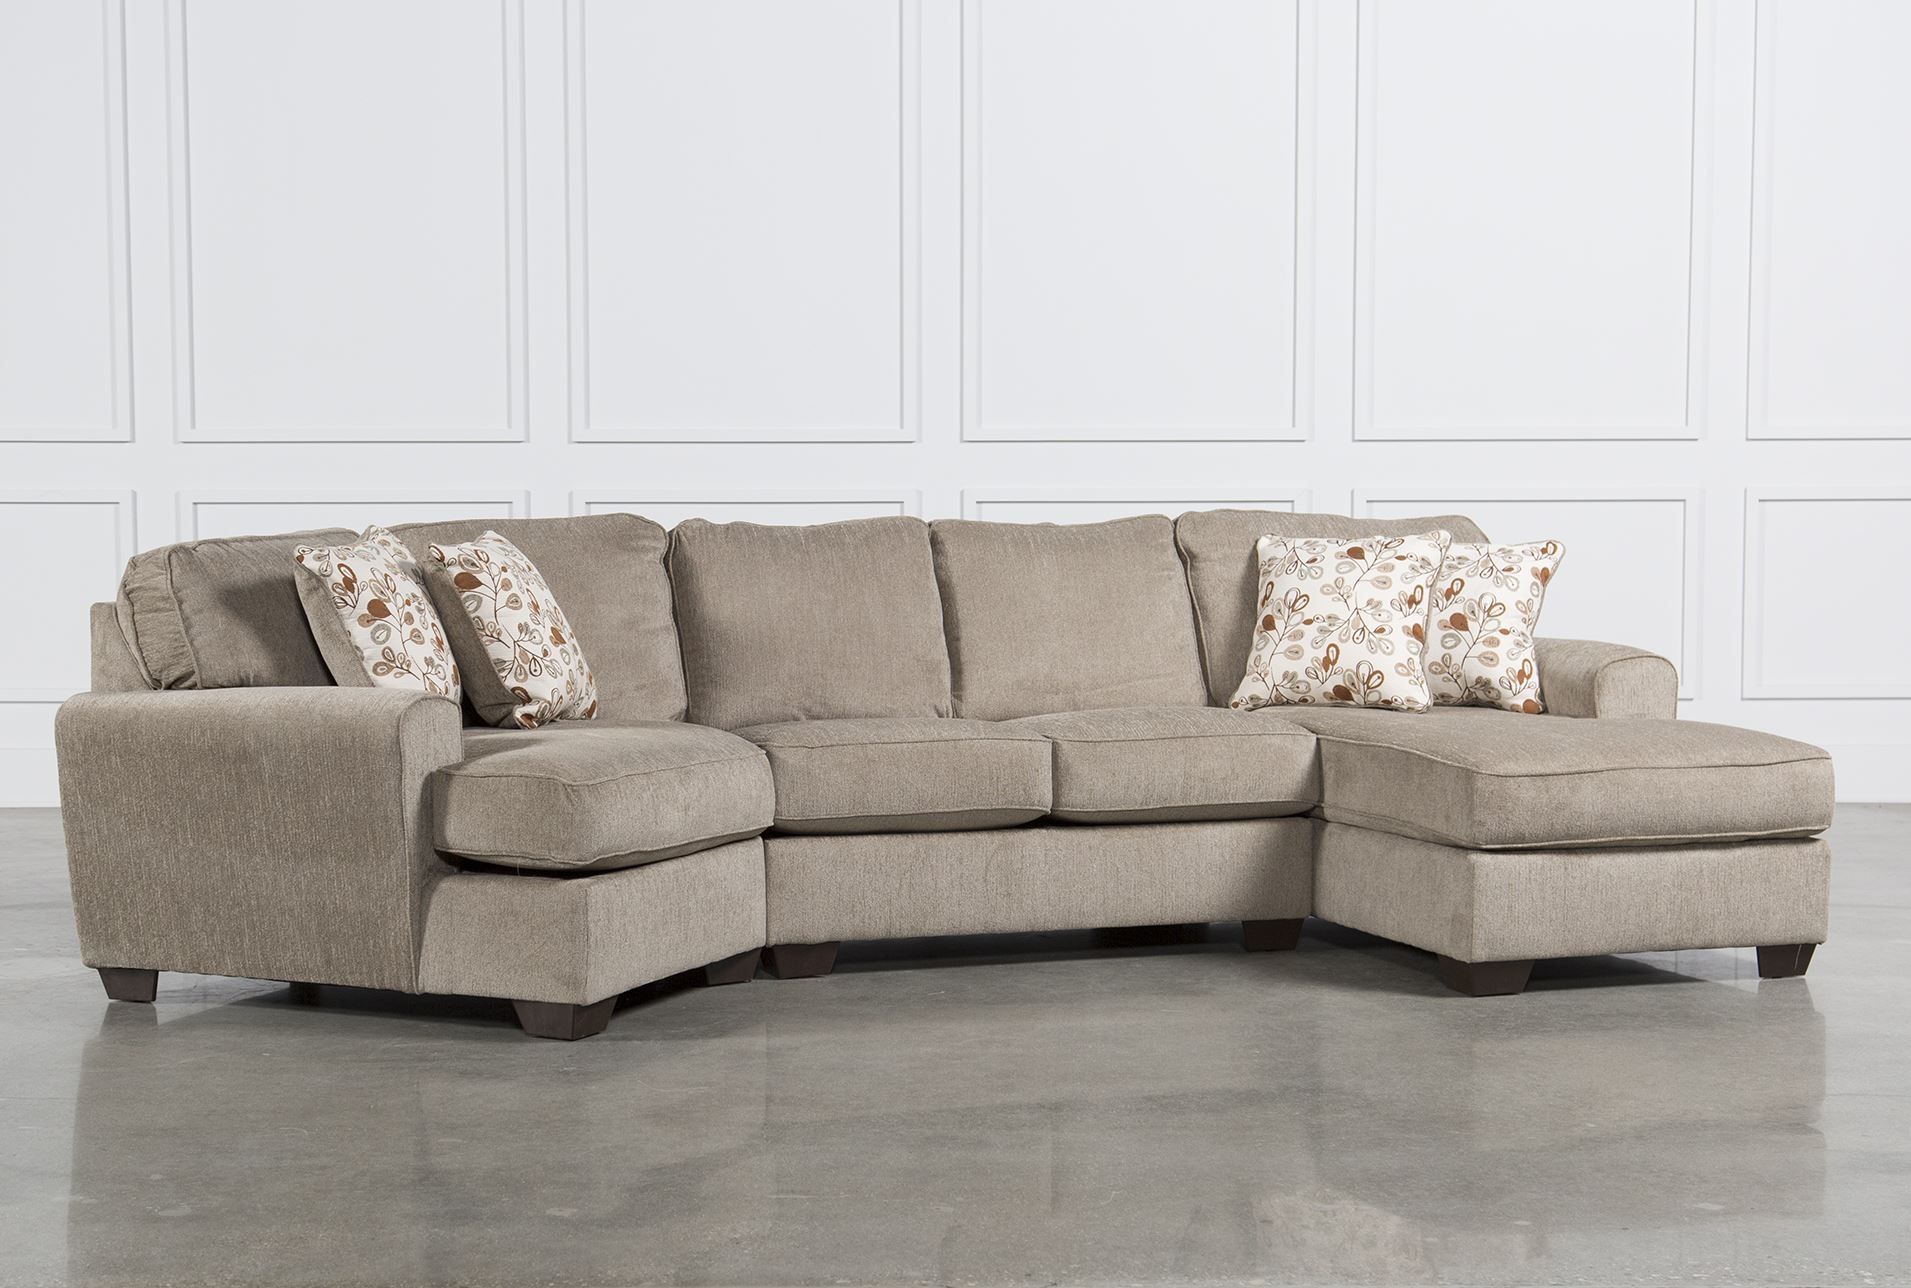 12 Ideas of Angled Chaise Sofa